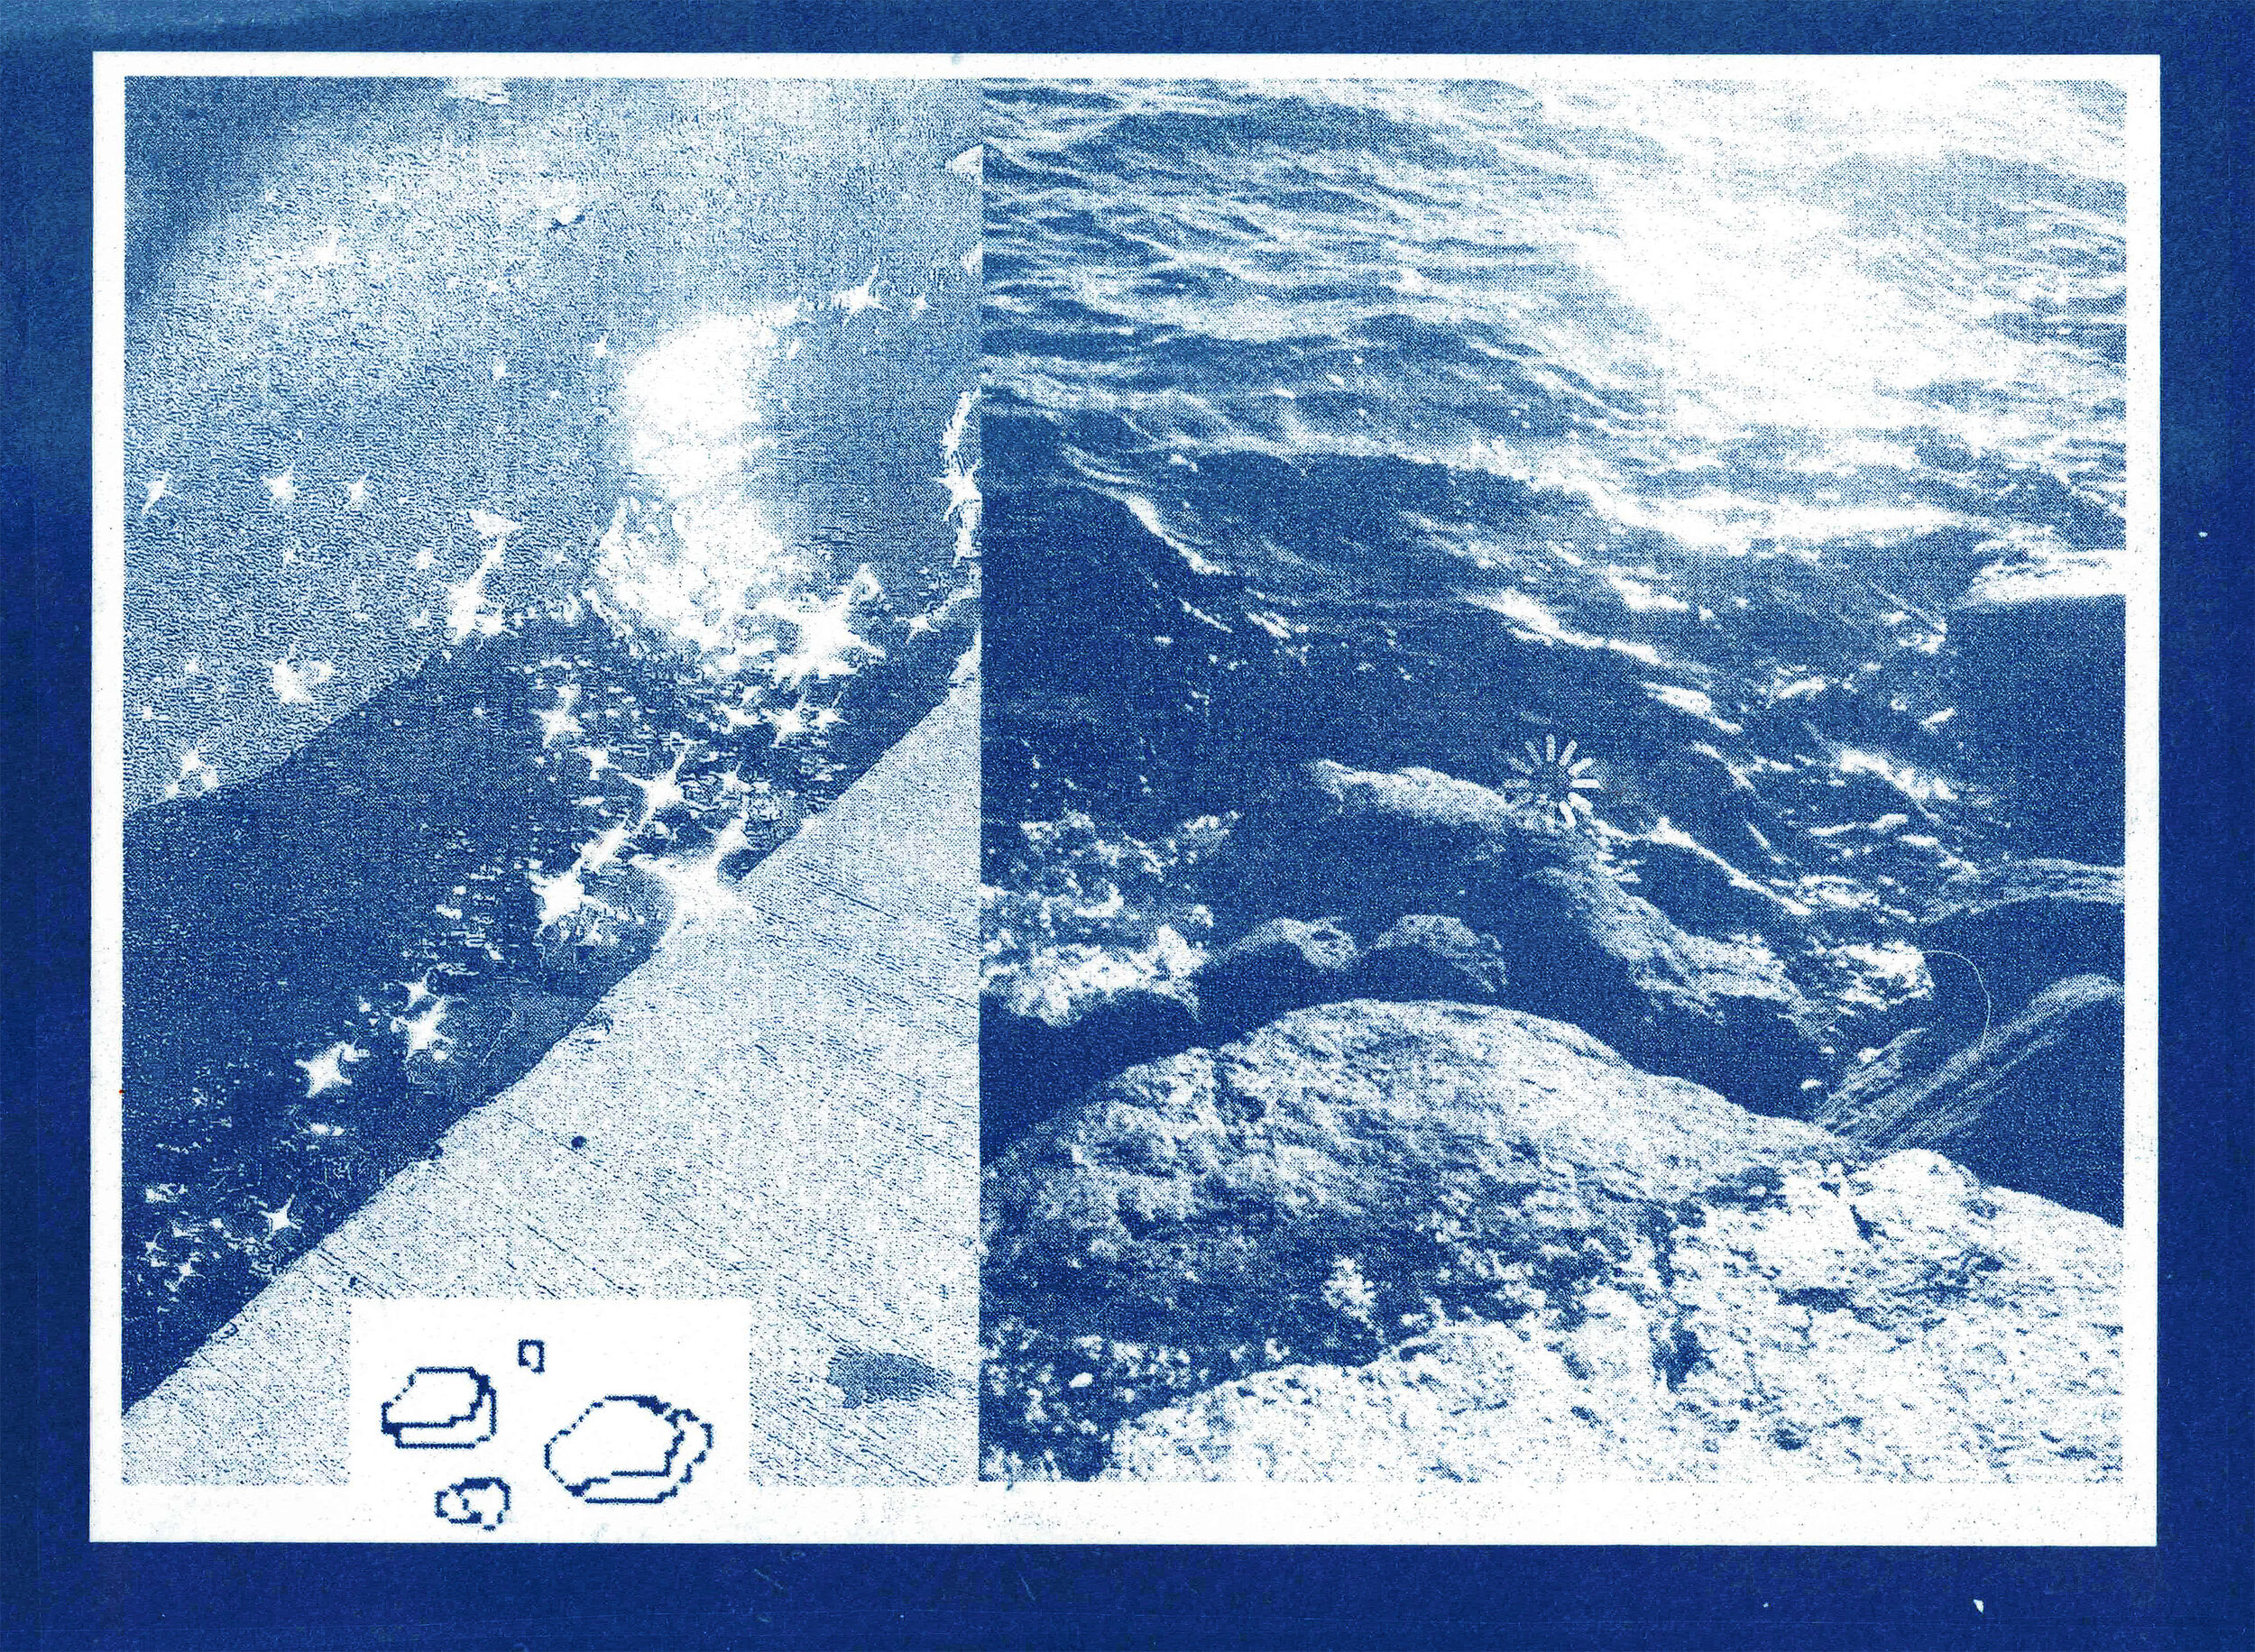   Cyanotype No. 28_Summer 2020  cyanotype on Strathmore bristol paper, 270 gsm 8.5 x 5.5 in. (21.6 x 14 cm.) unique print 2020 